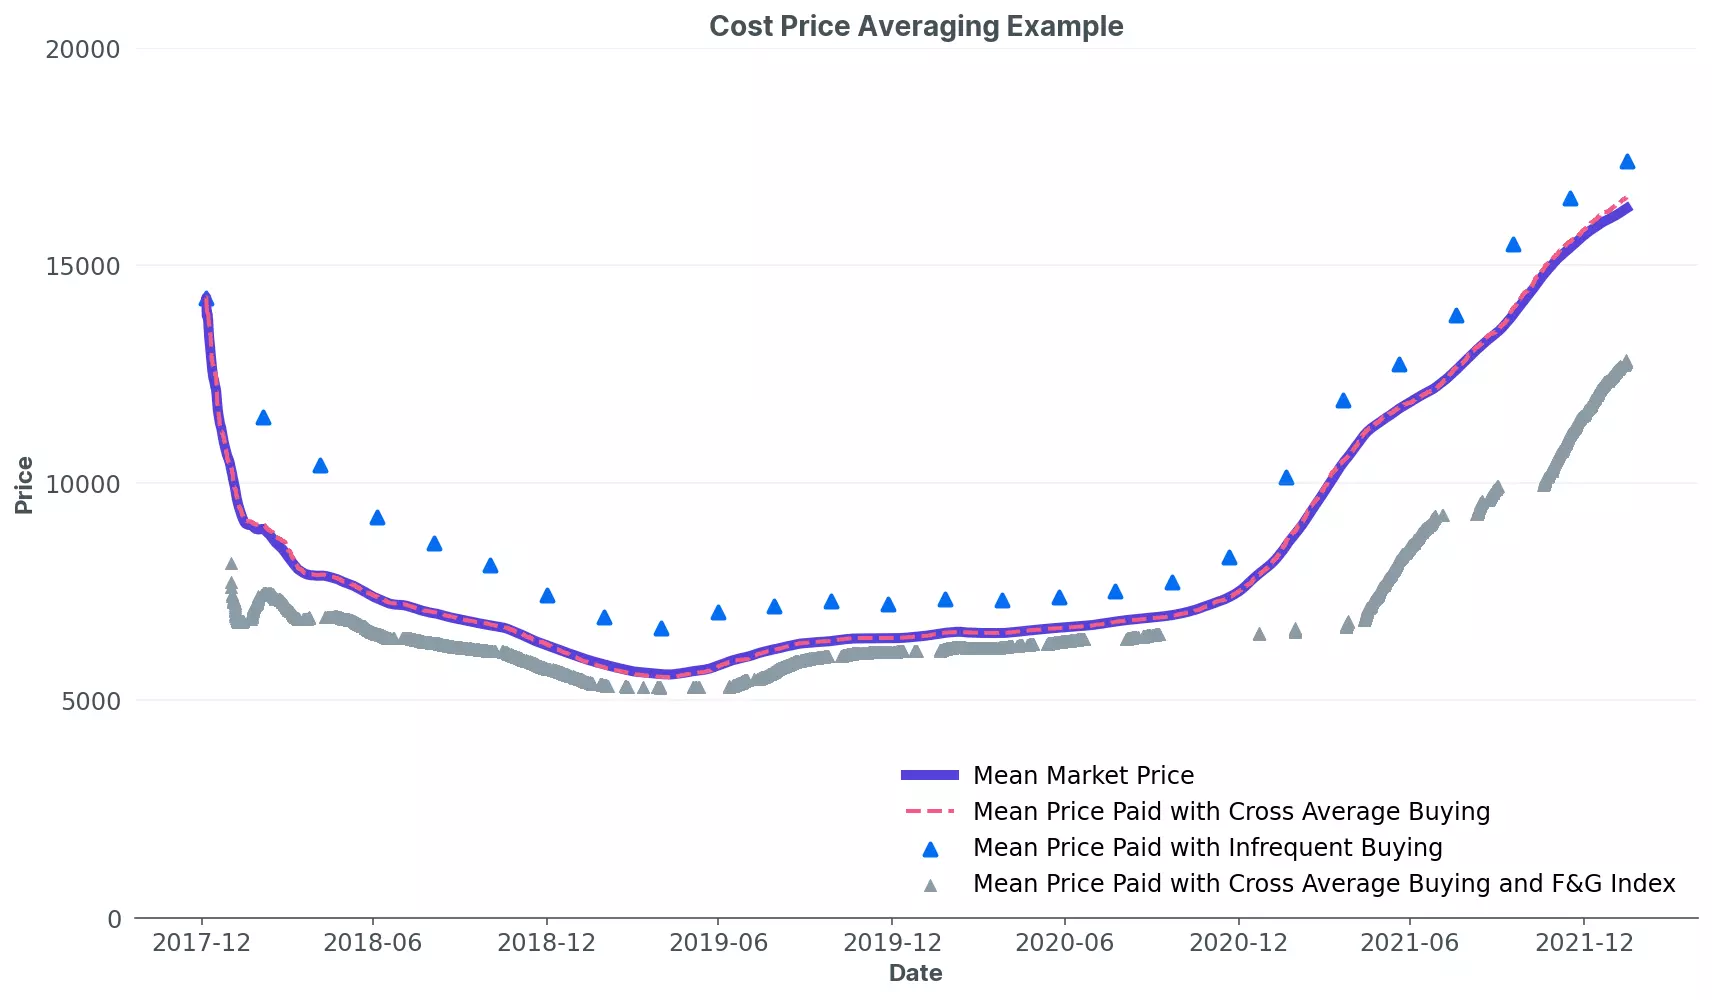 Cost Price Averaging Example